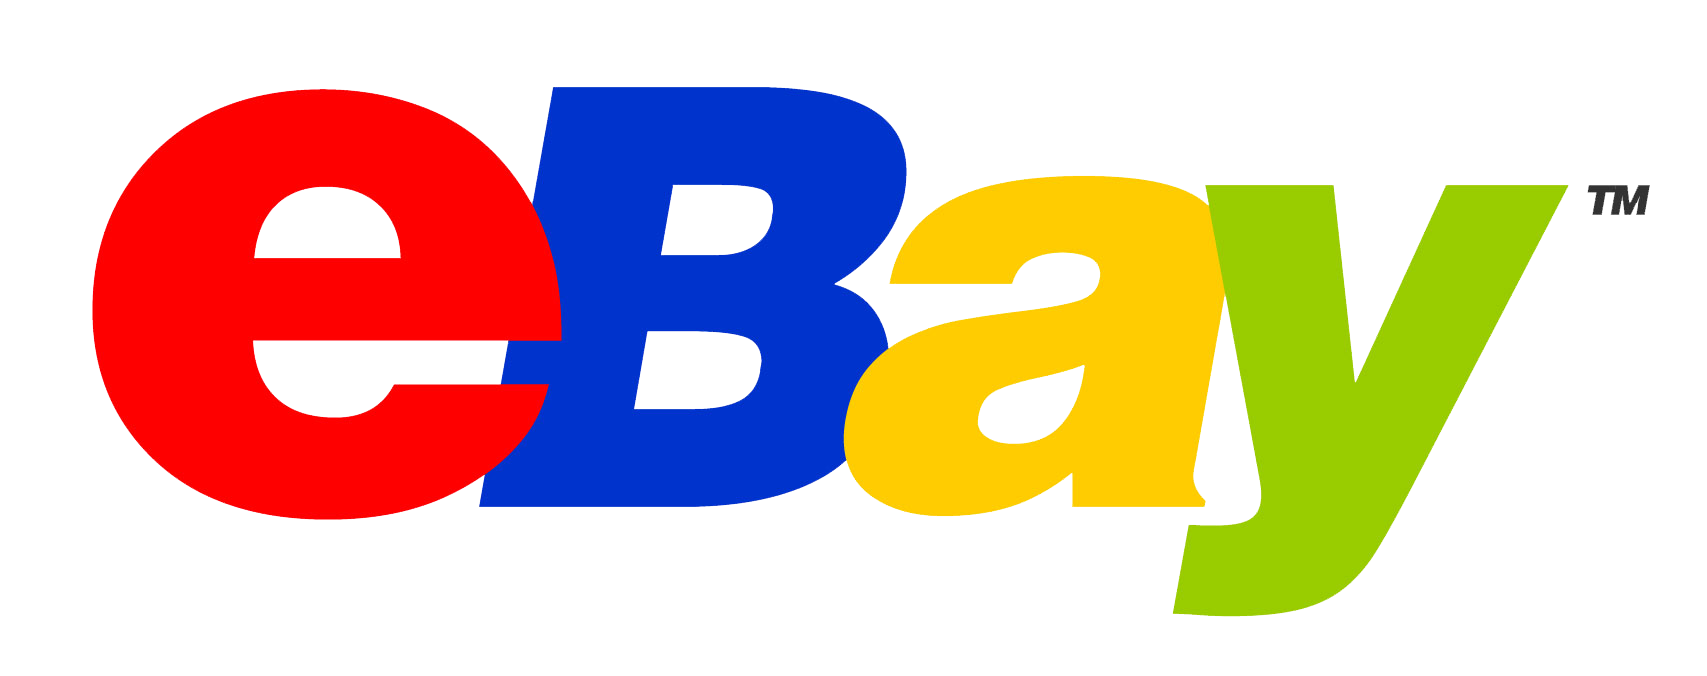 Ebay Logo PNG